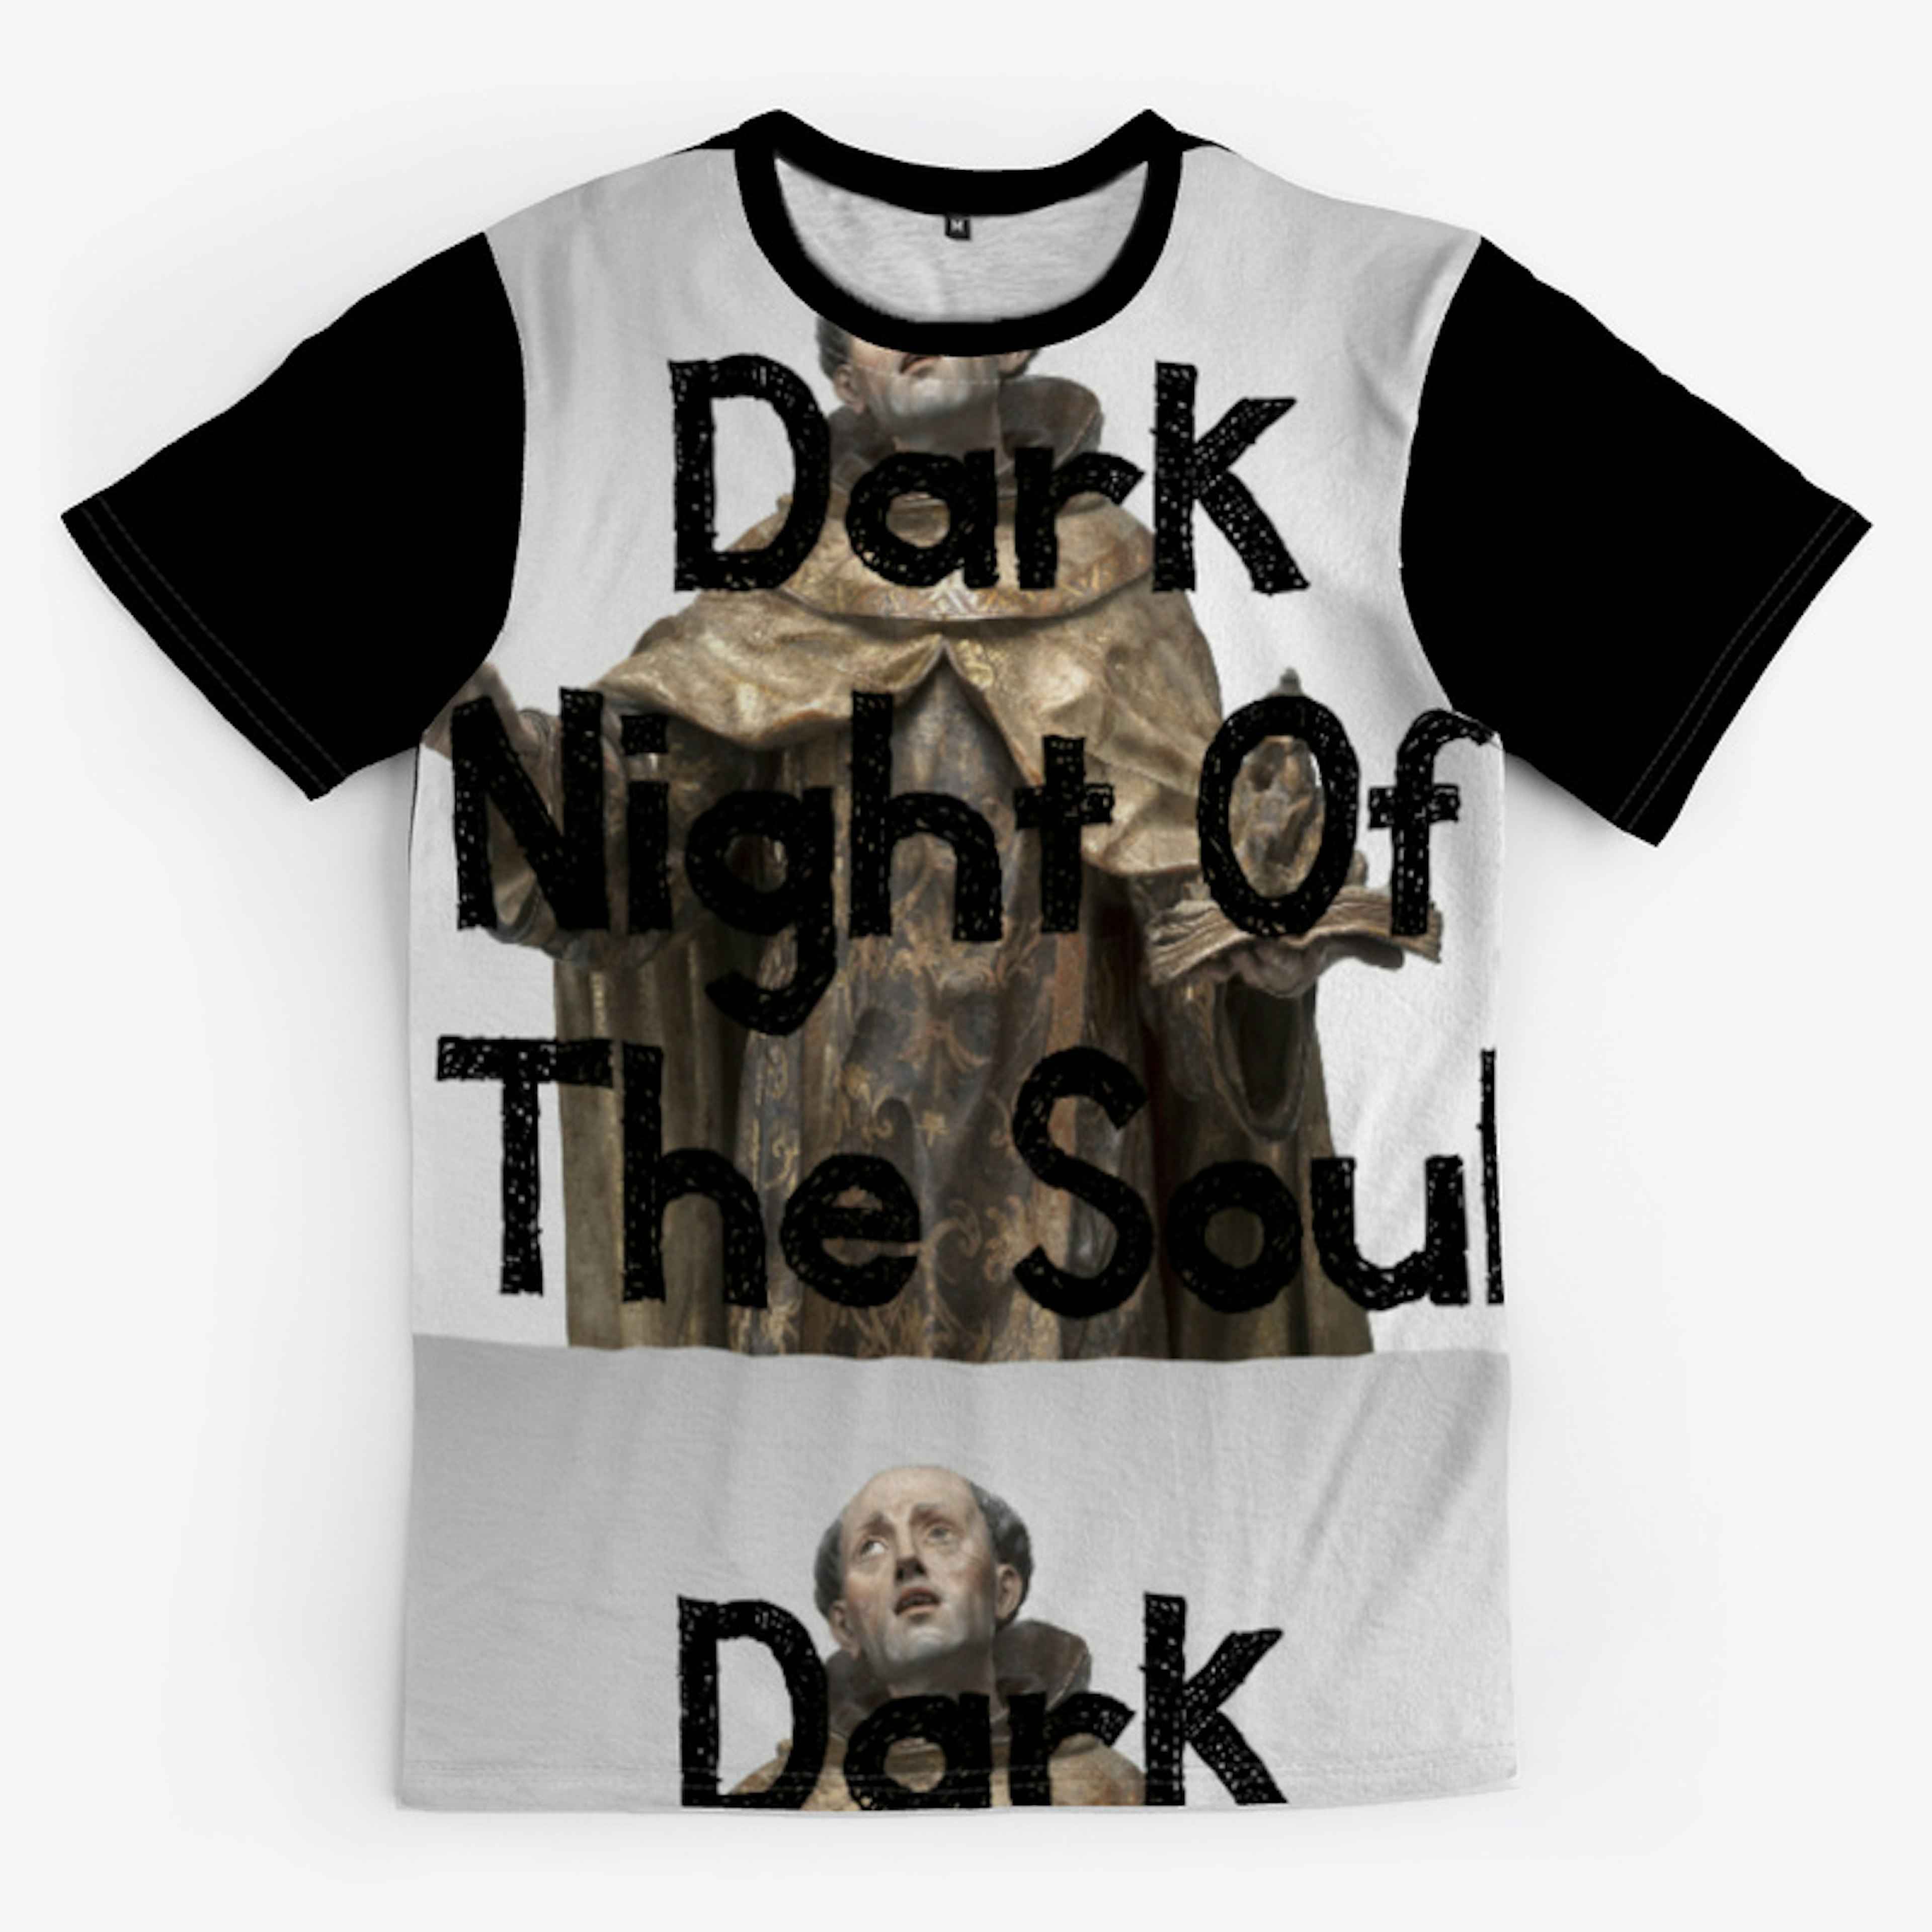  Dark Night of the Soul